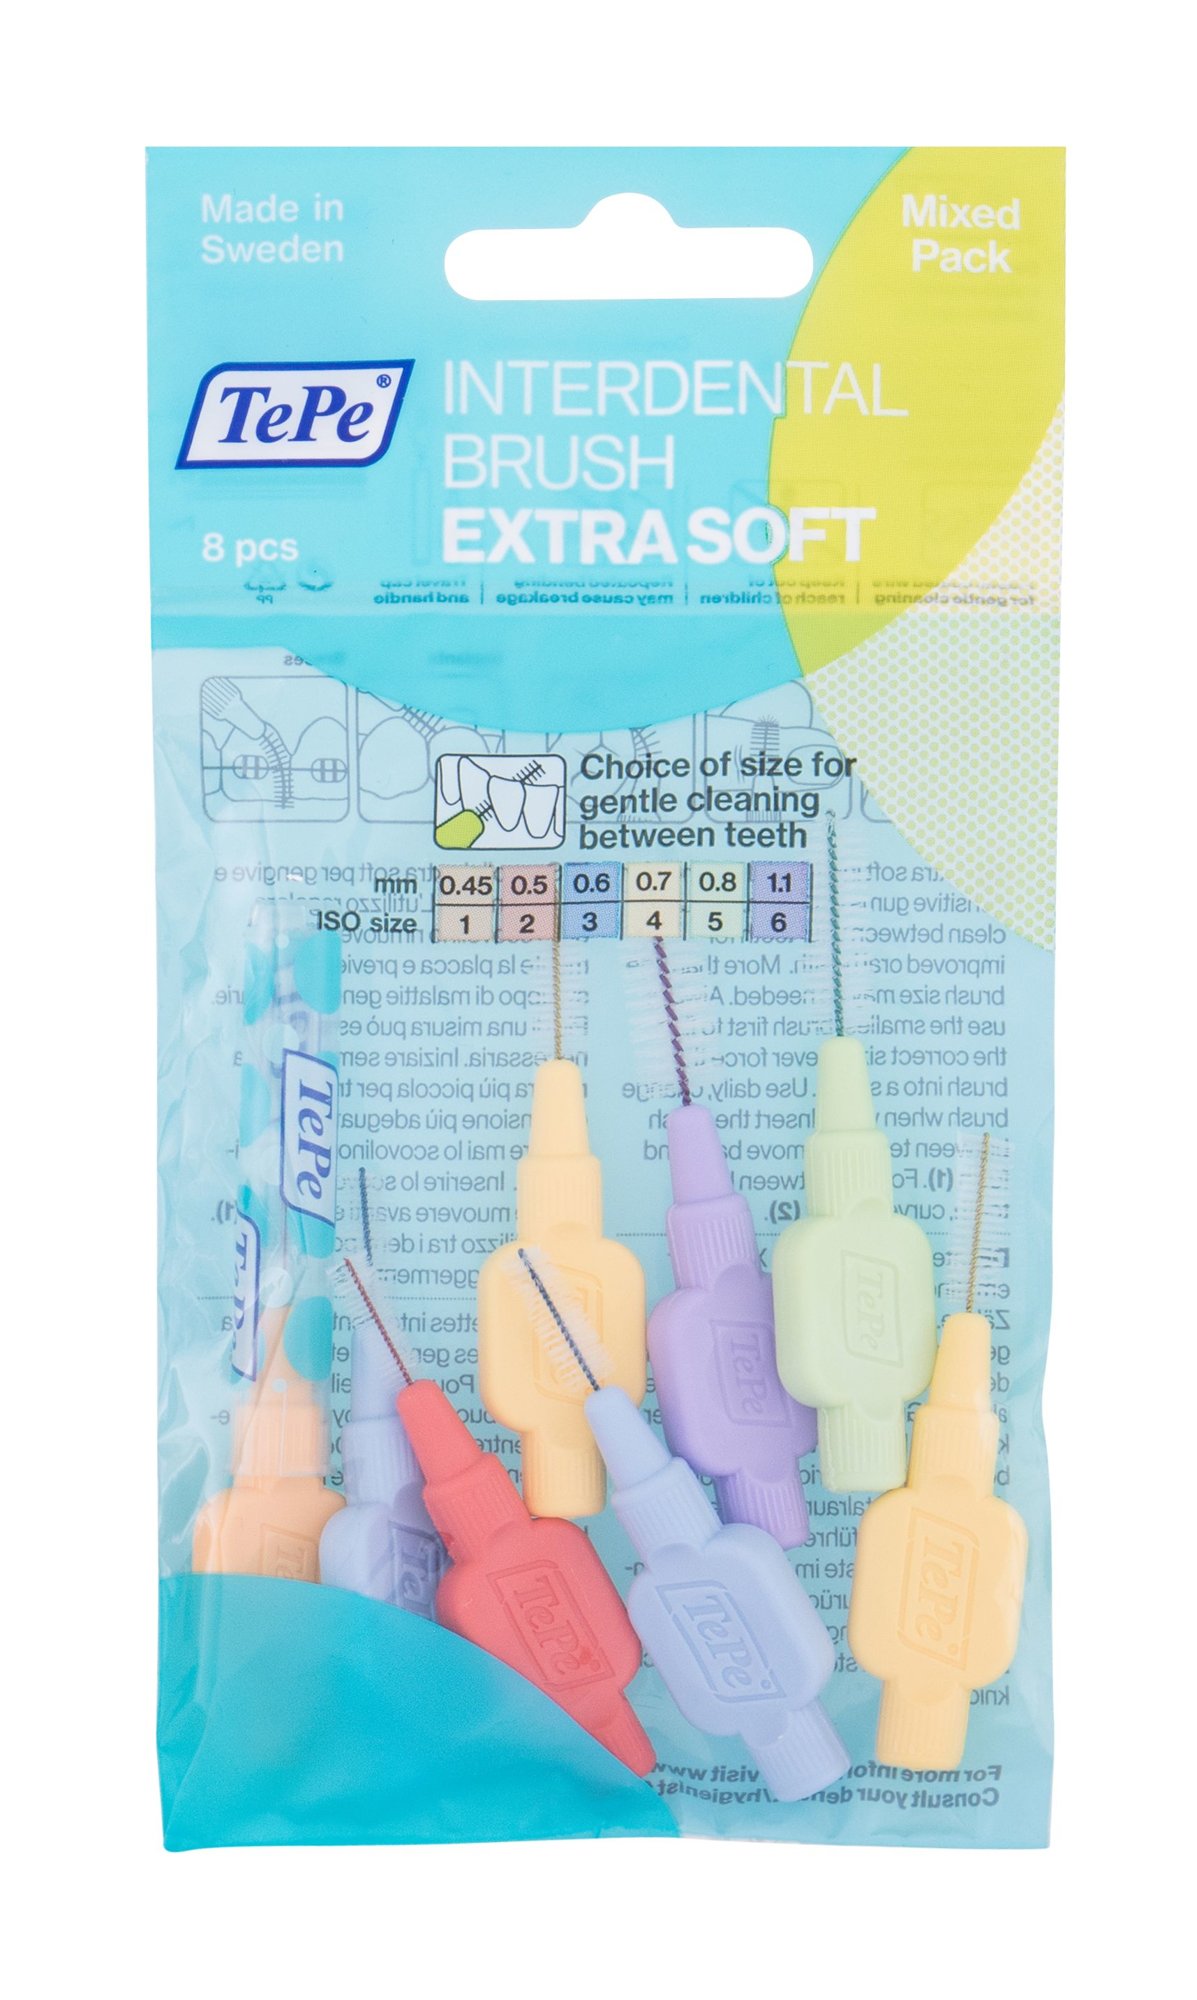 TePe Extra Soft